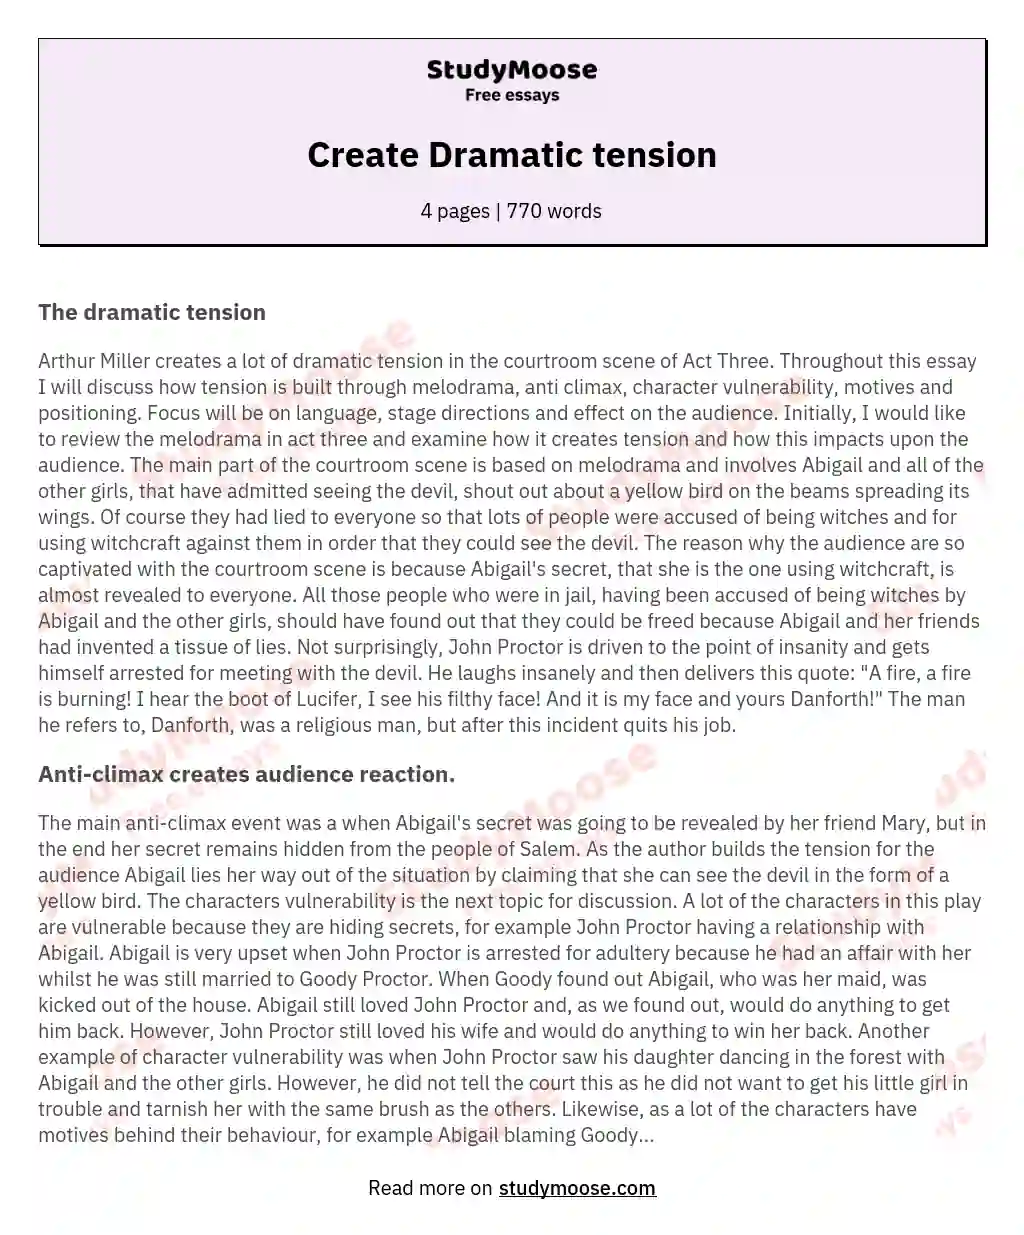 Create Dramatic tension